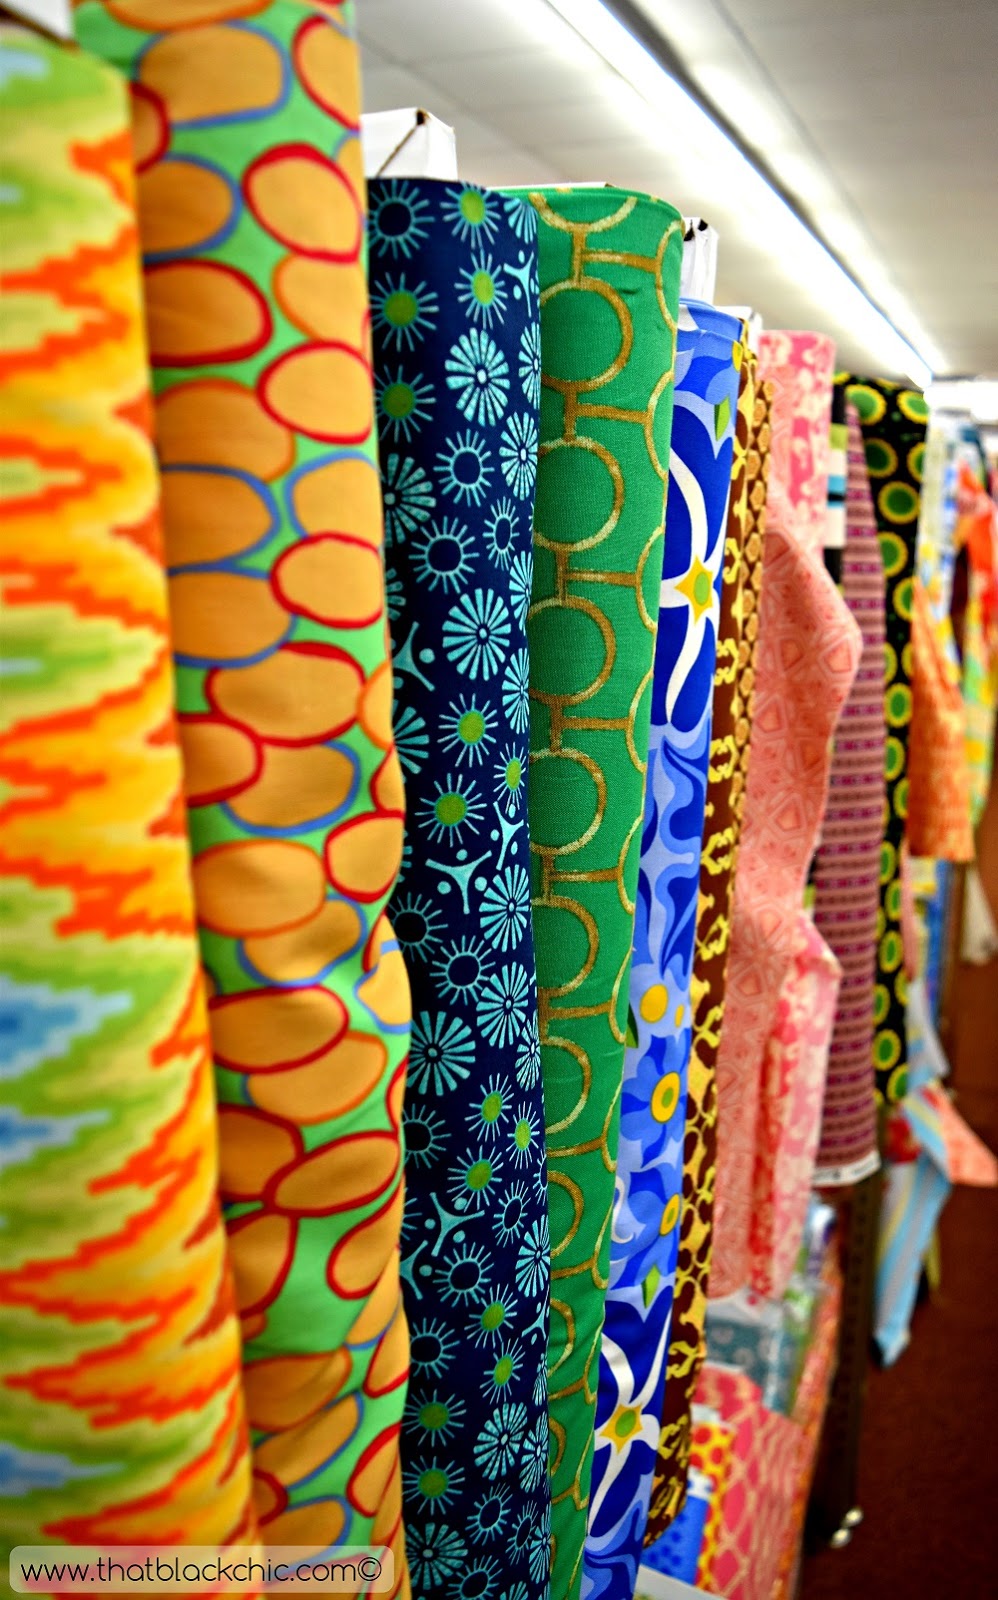 Fabricmart Has Fabrics Galore Fabric Haul Giveaway